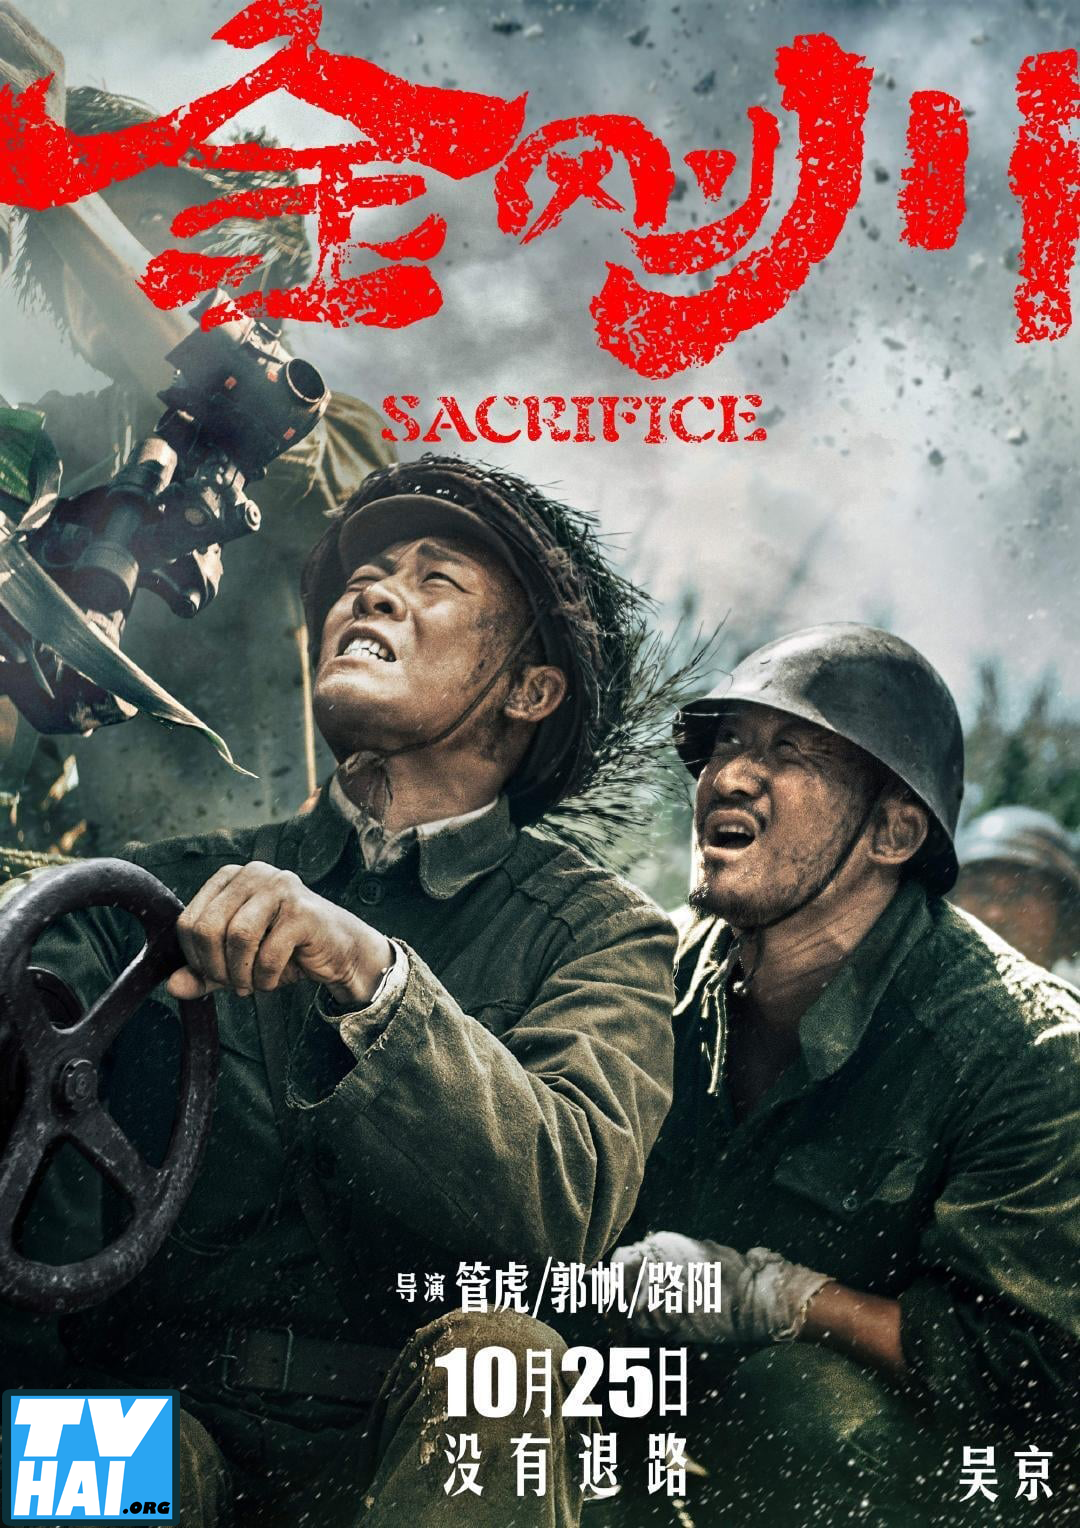 Poster Phim Hiến Dâng (The Sacrifice)